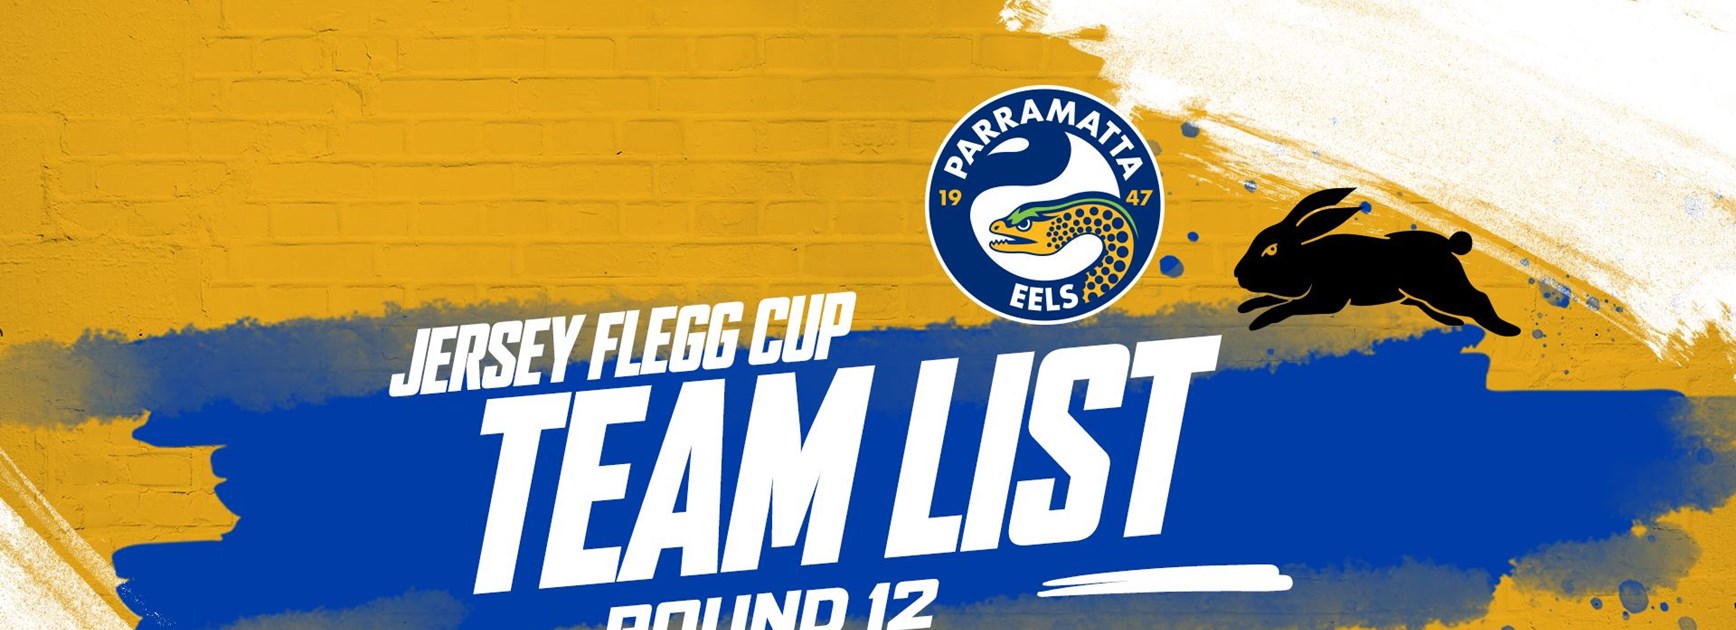 Jersey Flegg Cup - Rabbitohs v Eels, Round 12